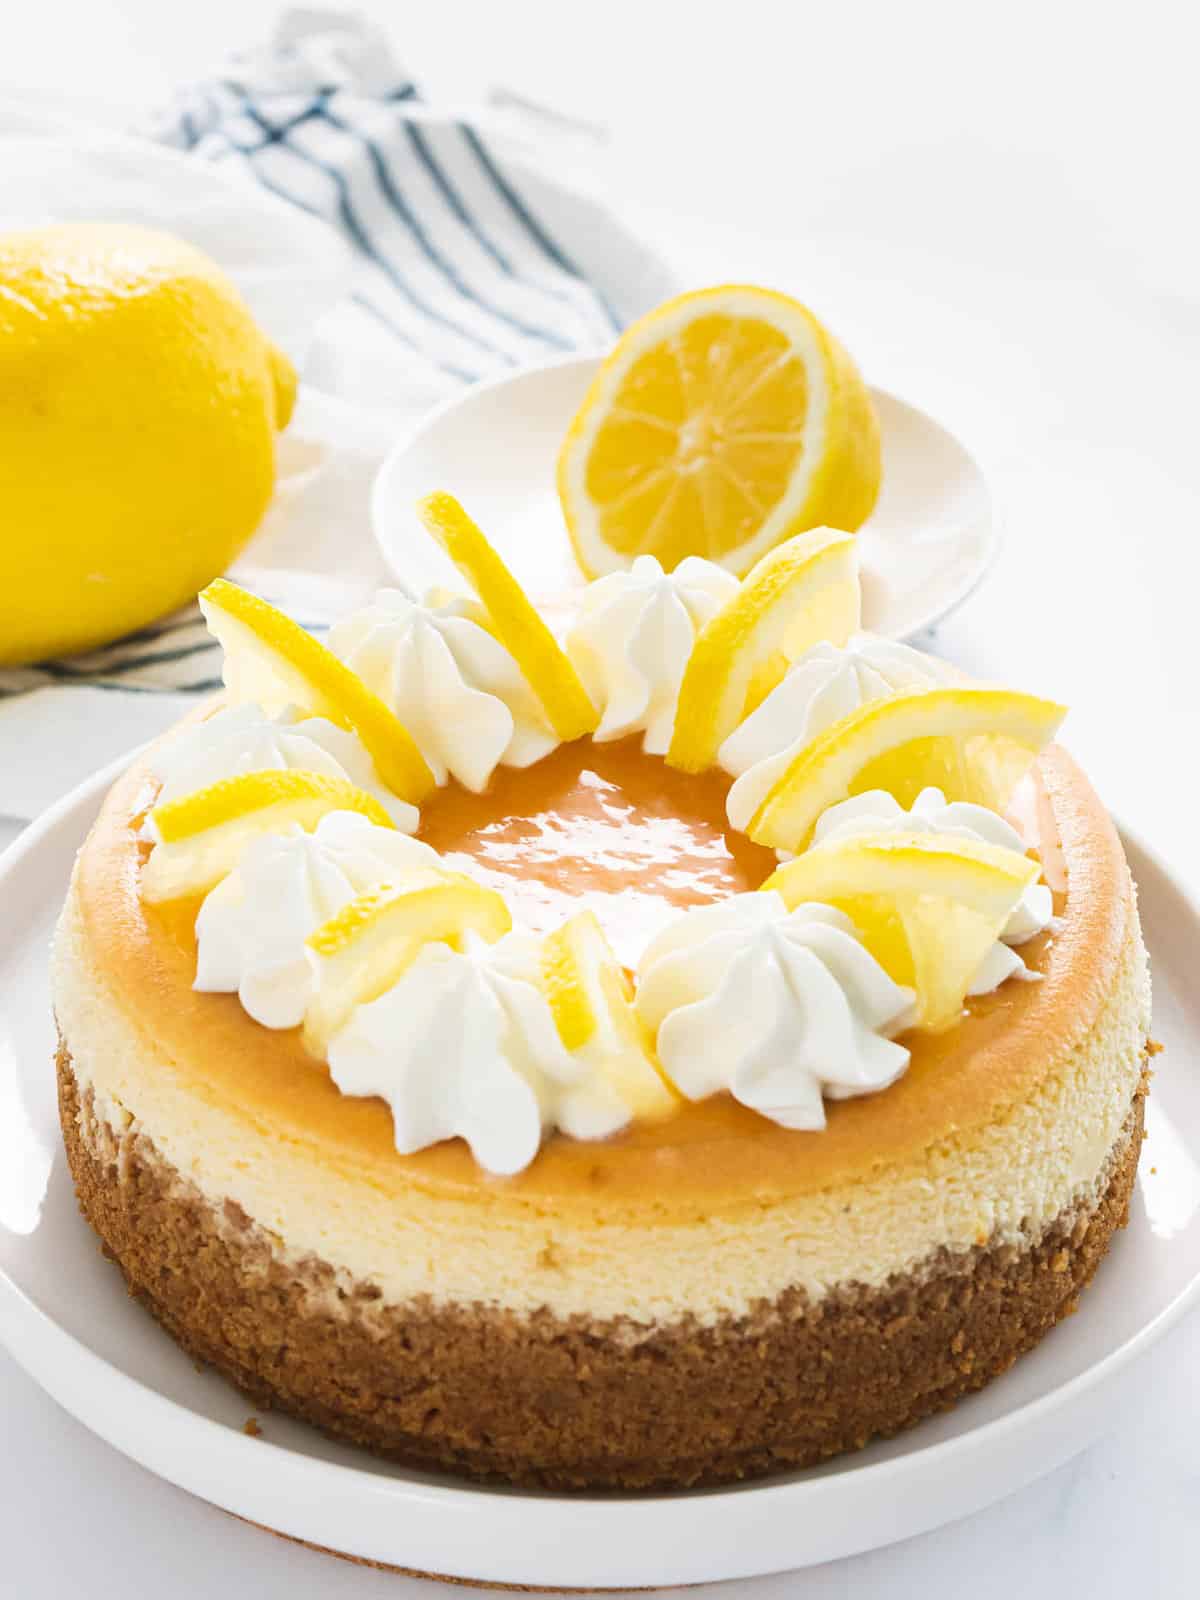 Lemon cheesecake with lemon slices, lemon curd, and whipped cream.